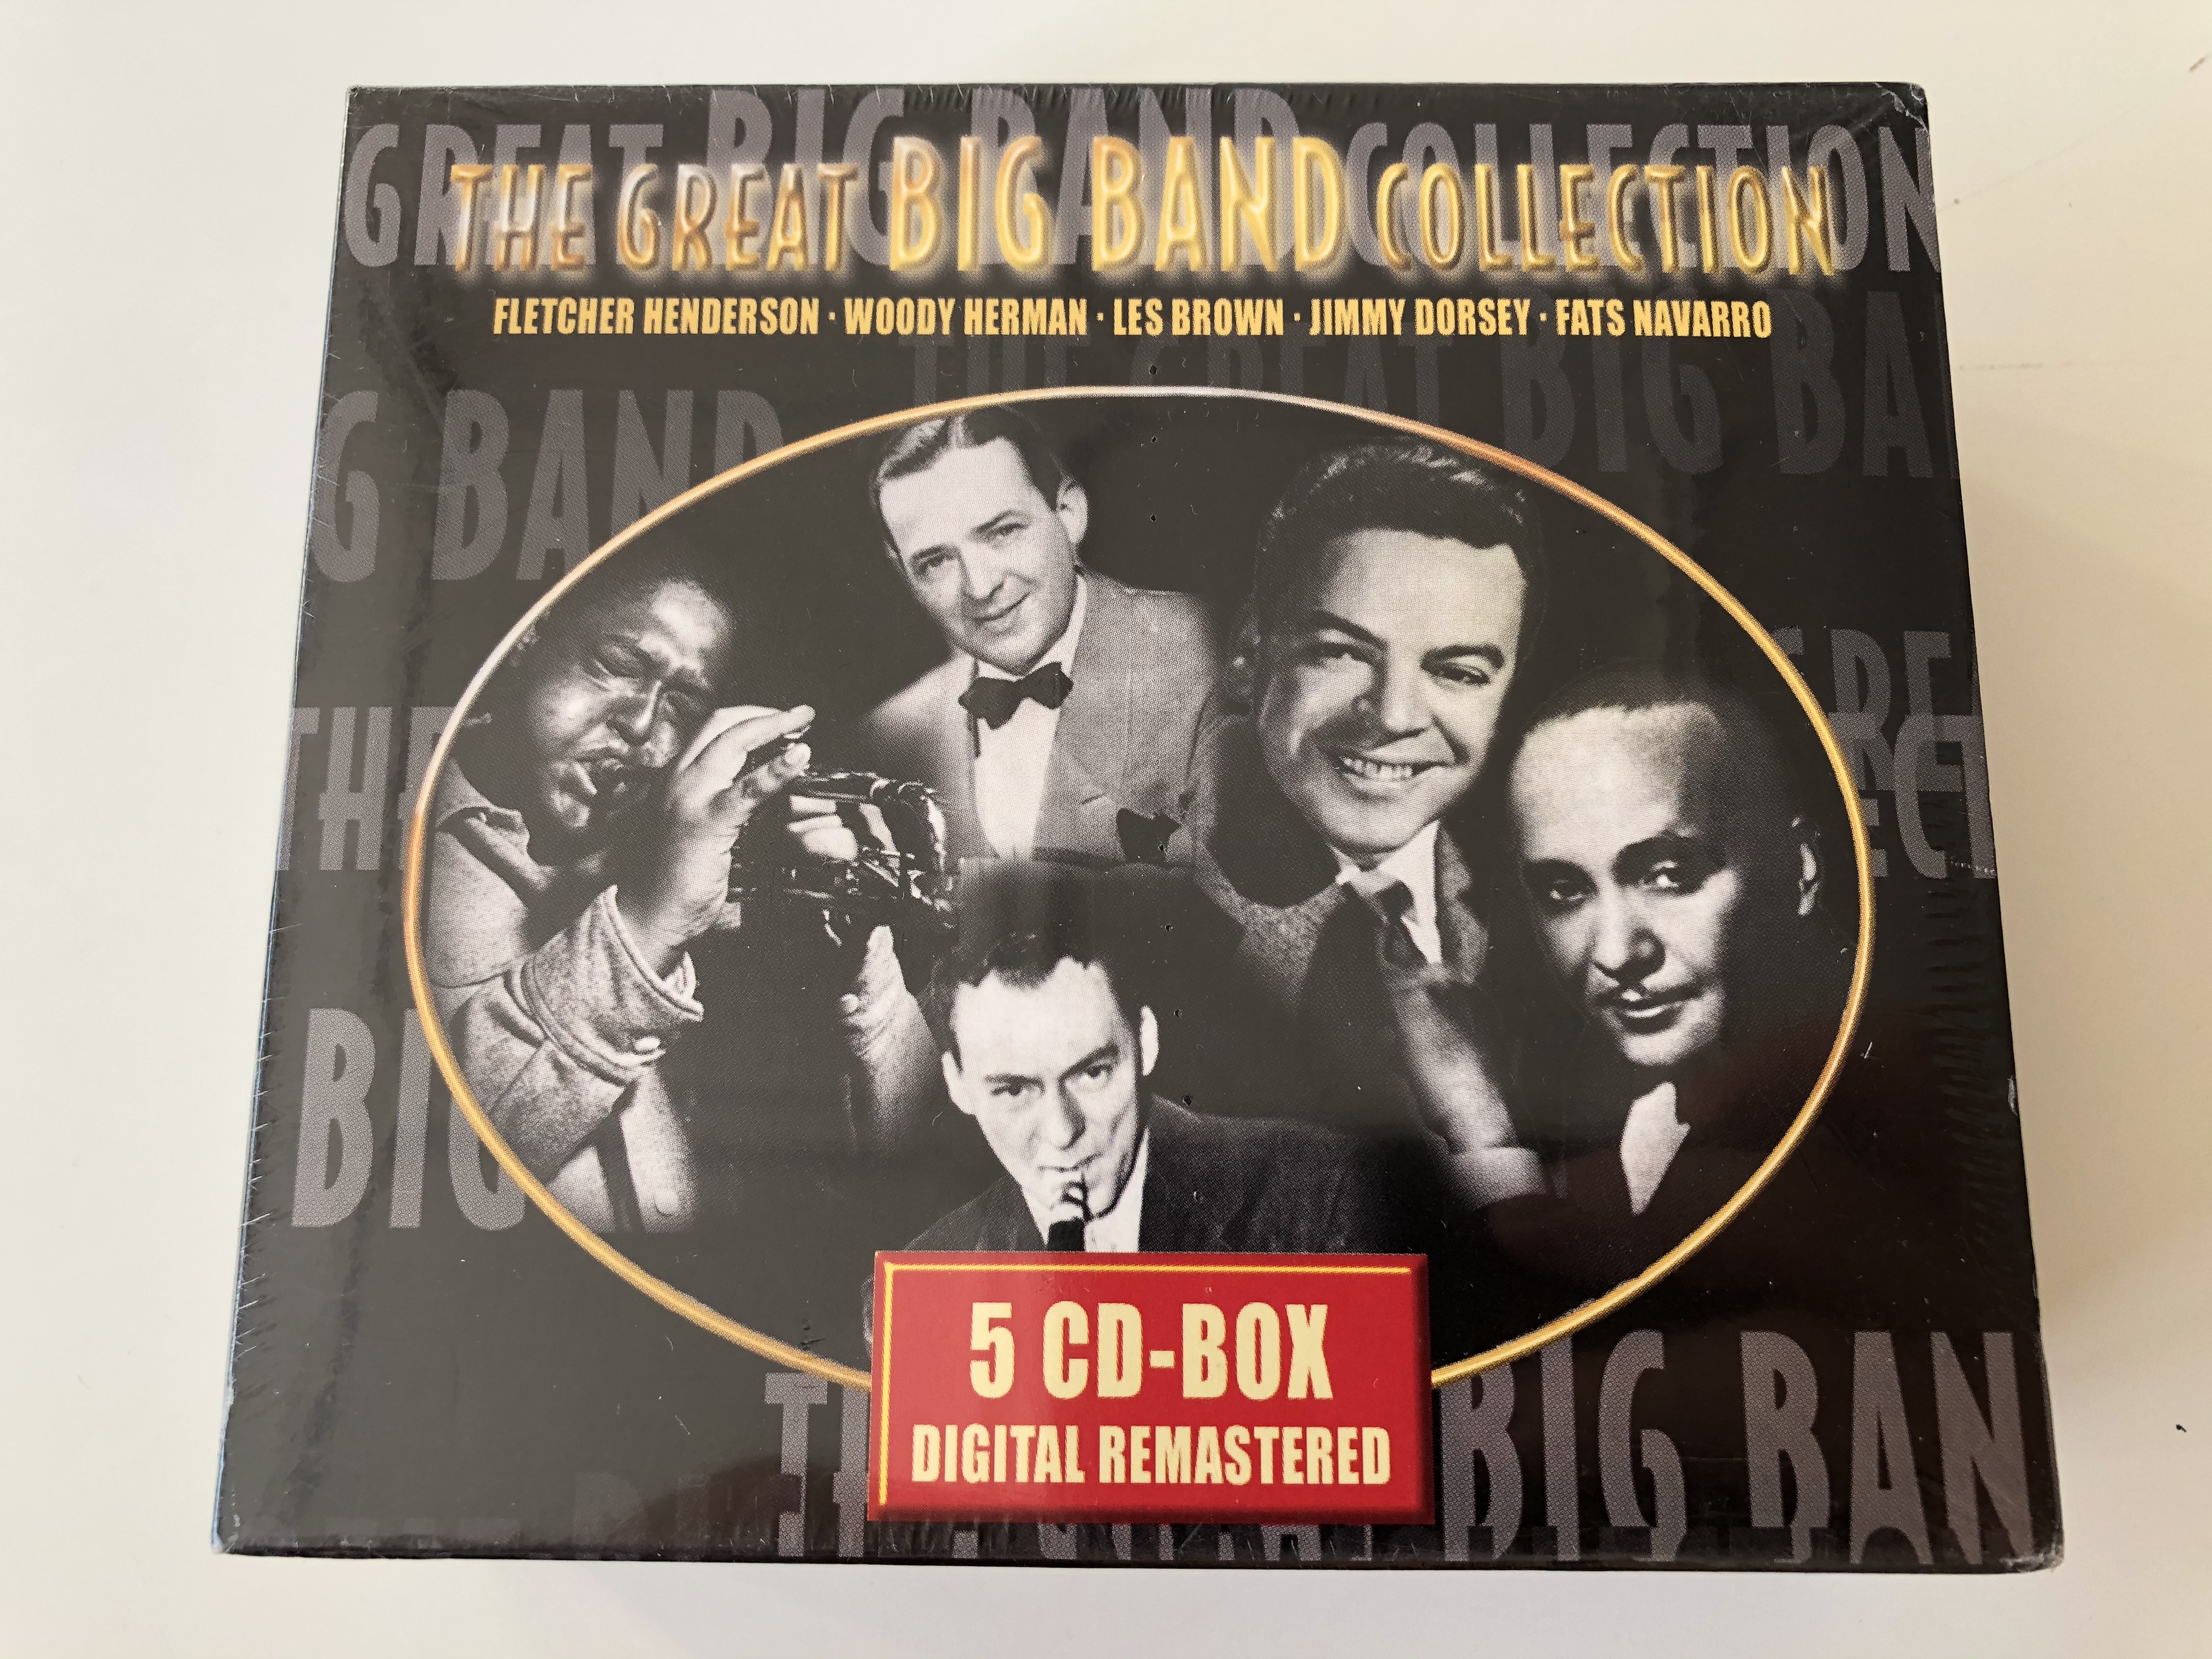 the-great-big-band-collection-fletcher-henderson-woody-herman-les-brown-jimmy-dorsey-fats-navarro-5-cd-box-digital-remastered-joan-records-bv-5x-audio-cd-set-box-2002-7153-1-.jpg